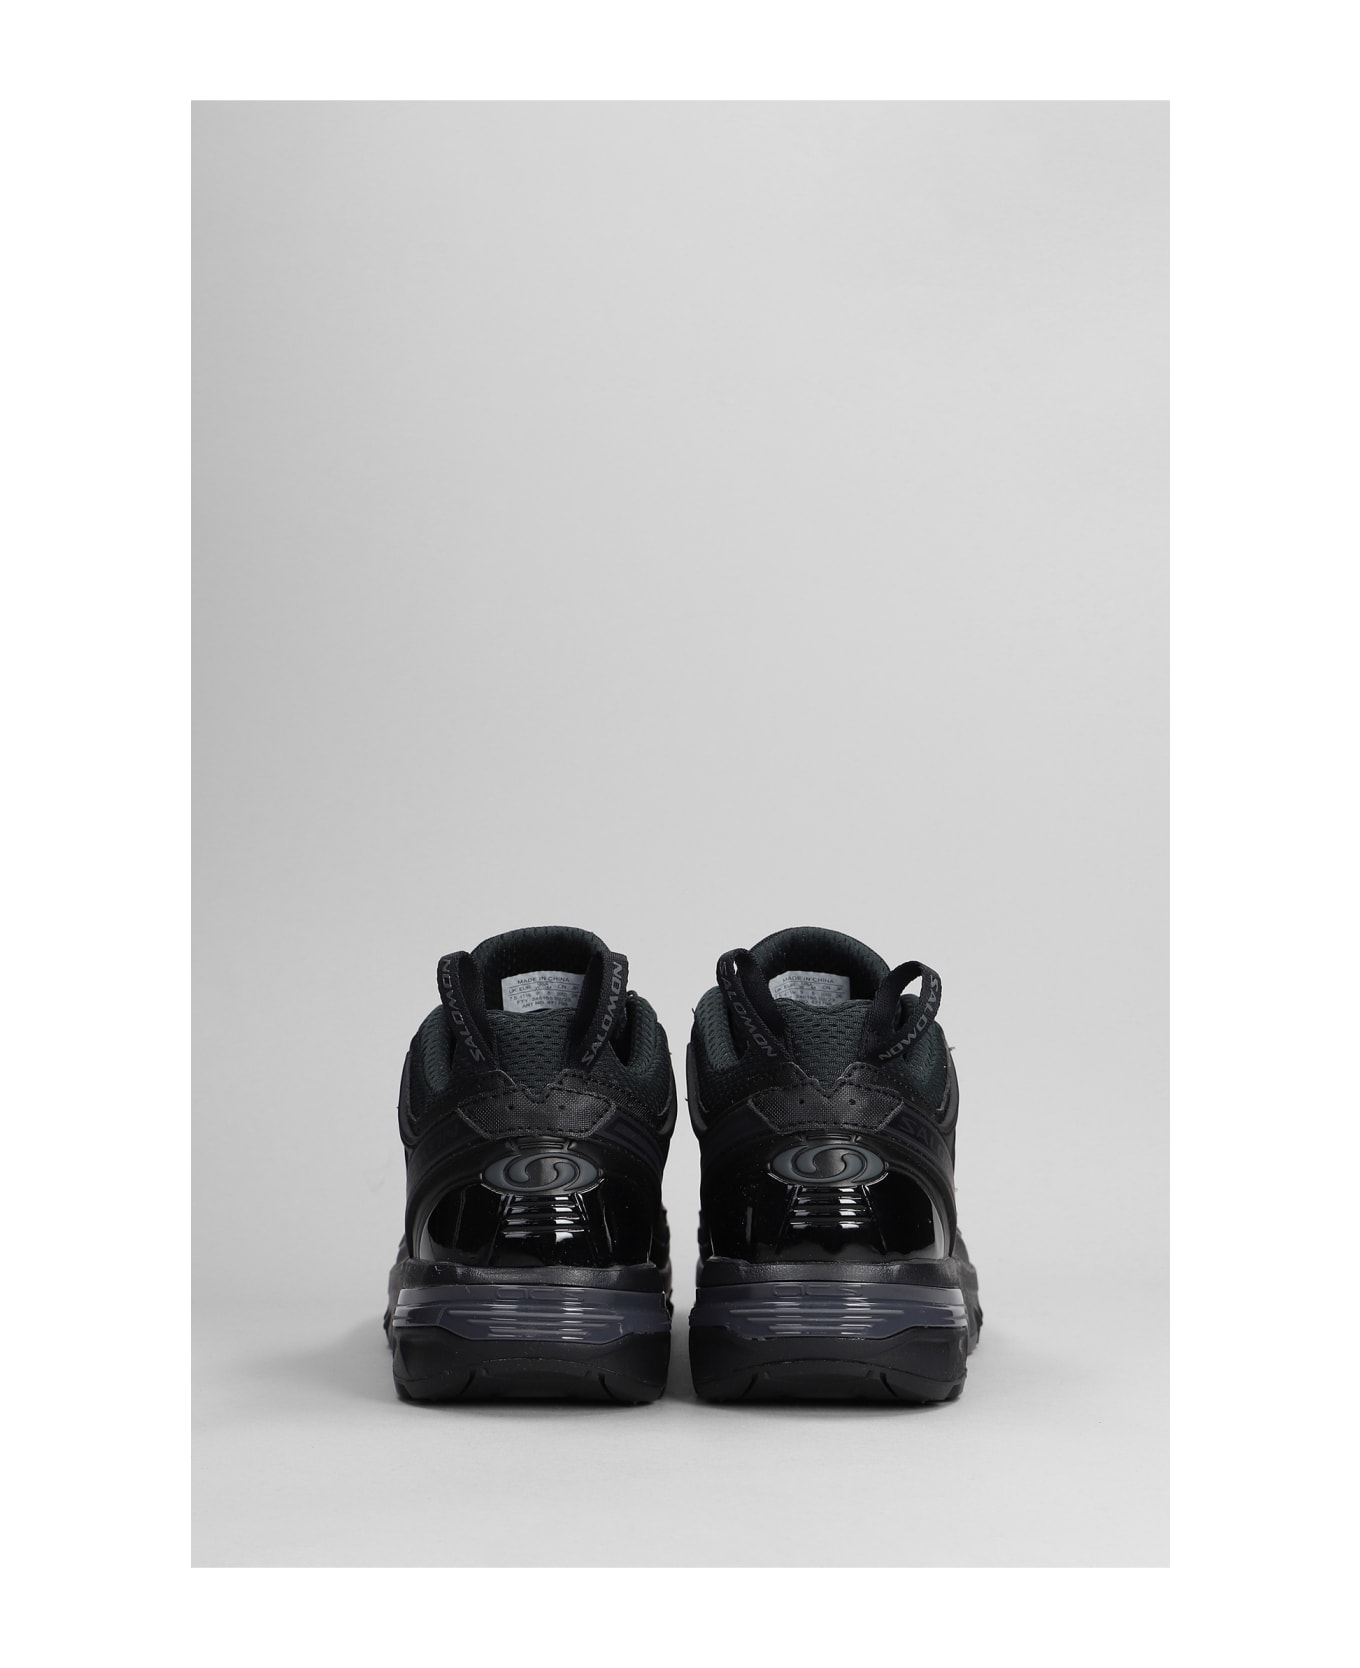 Salomon Acs Pro Sneakers In Black Synthetic Fibers - Black